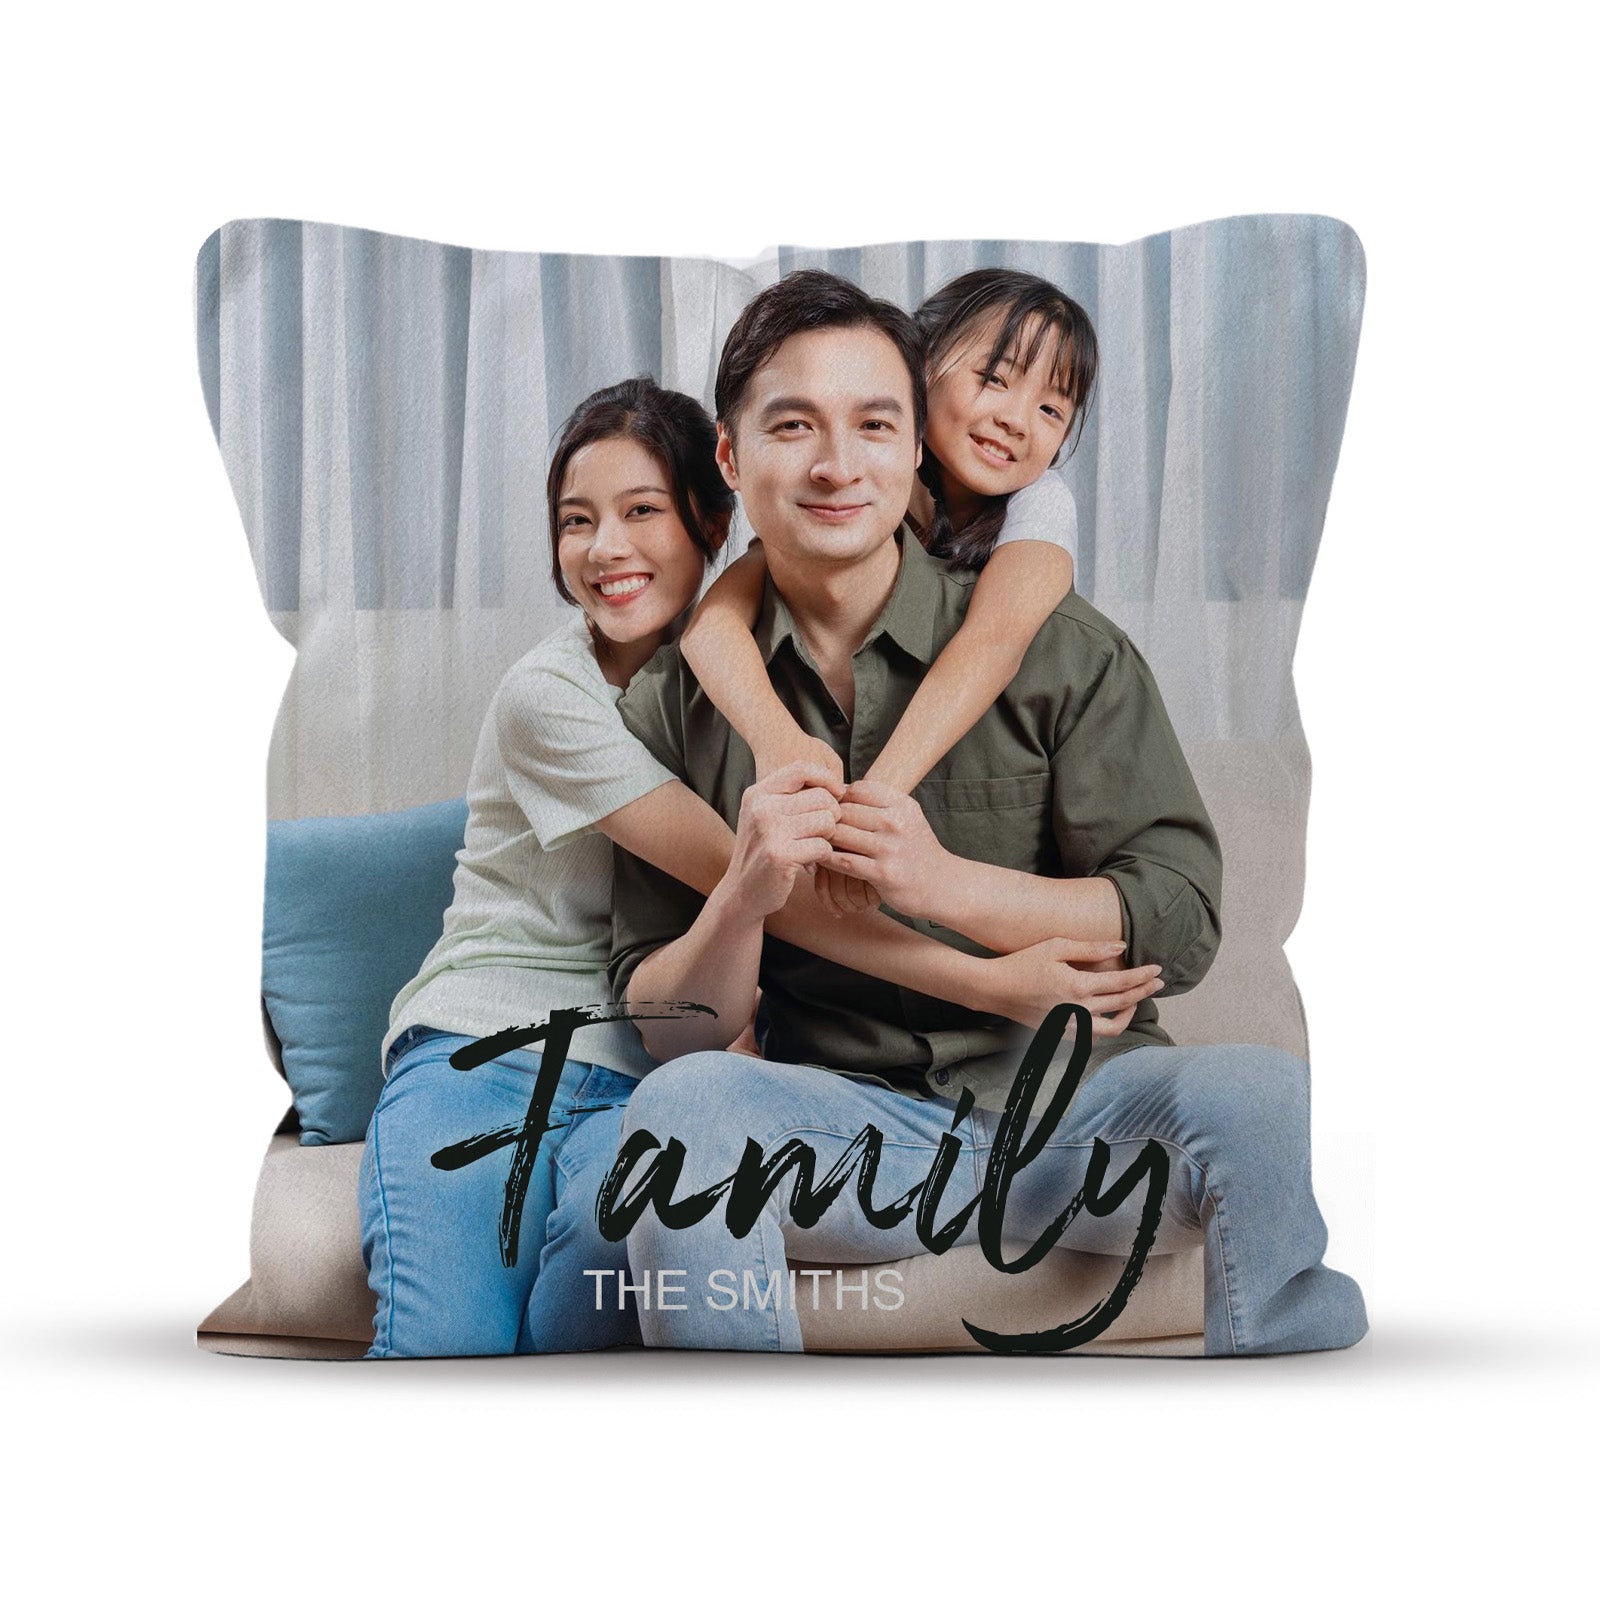 Family Custom Photo Pillows with Text Overlay